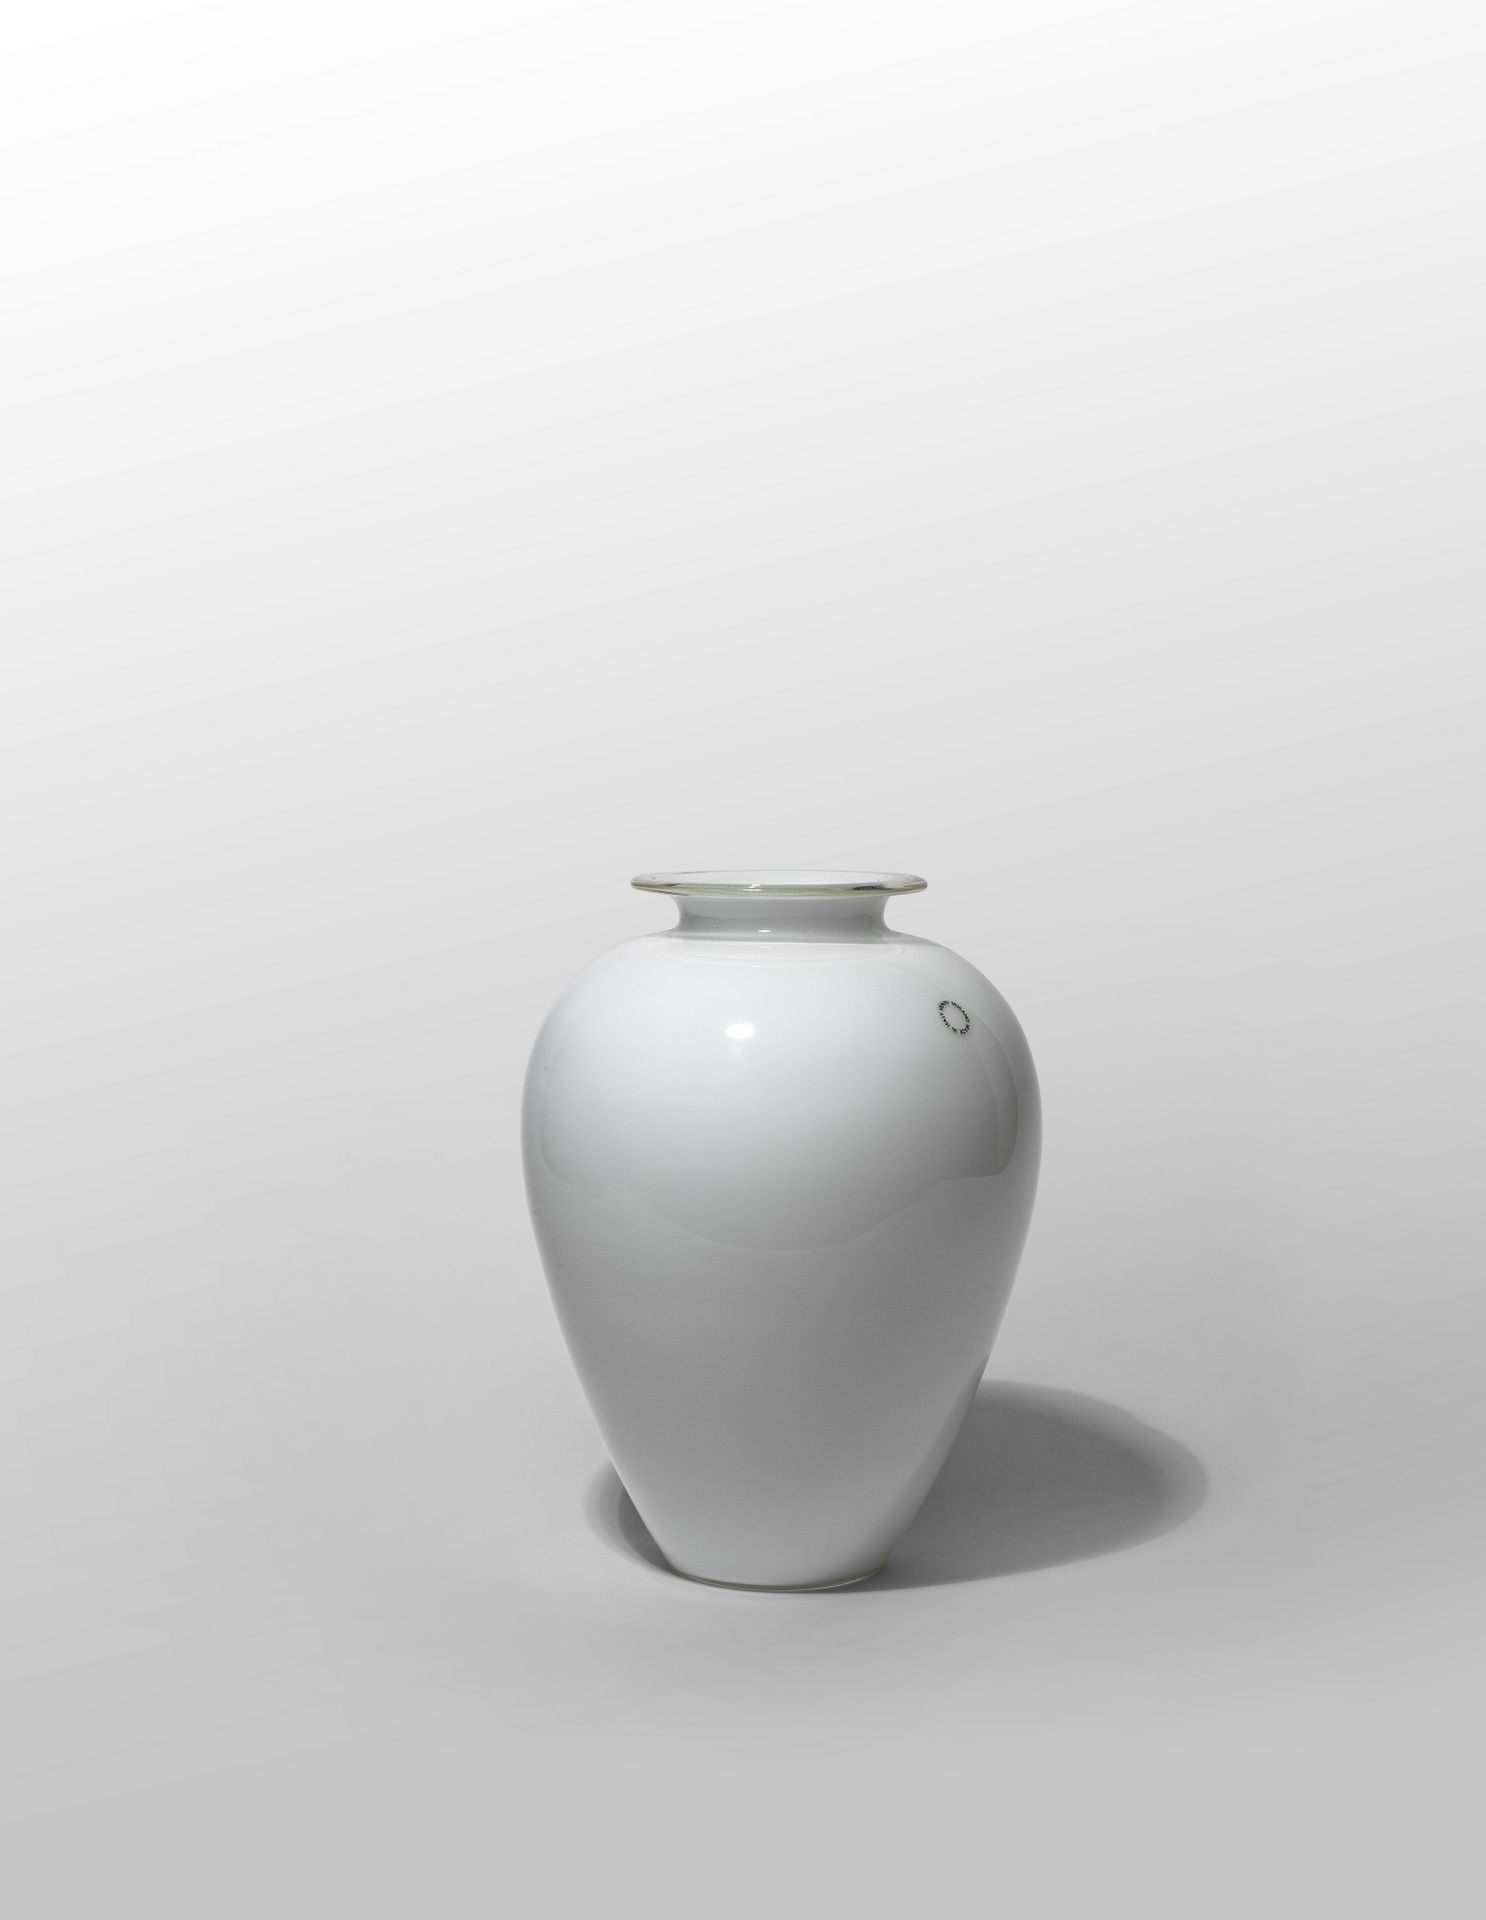 VENINI VENINI
一个乳白色的玻璃花瓶，上面有水晶边，1988
刻有 "VENINI 88 "的标记。原厂标签
高度为26.5厘米